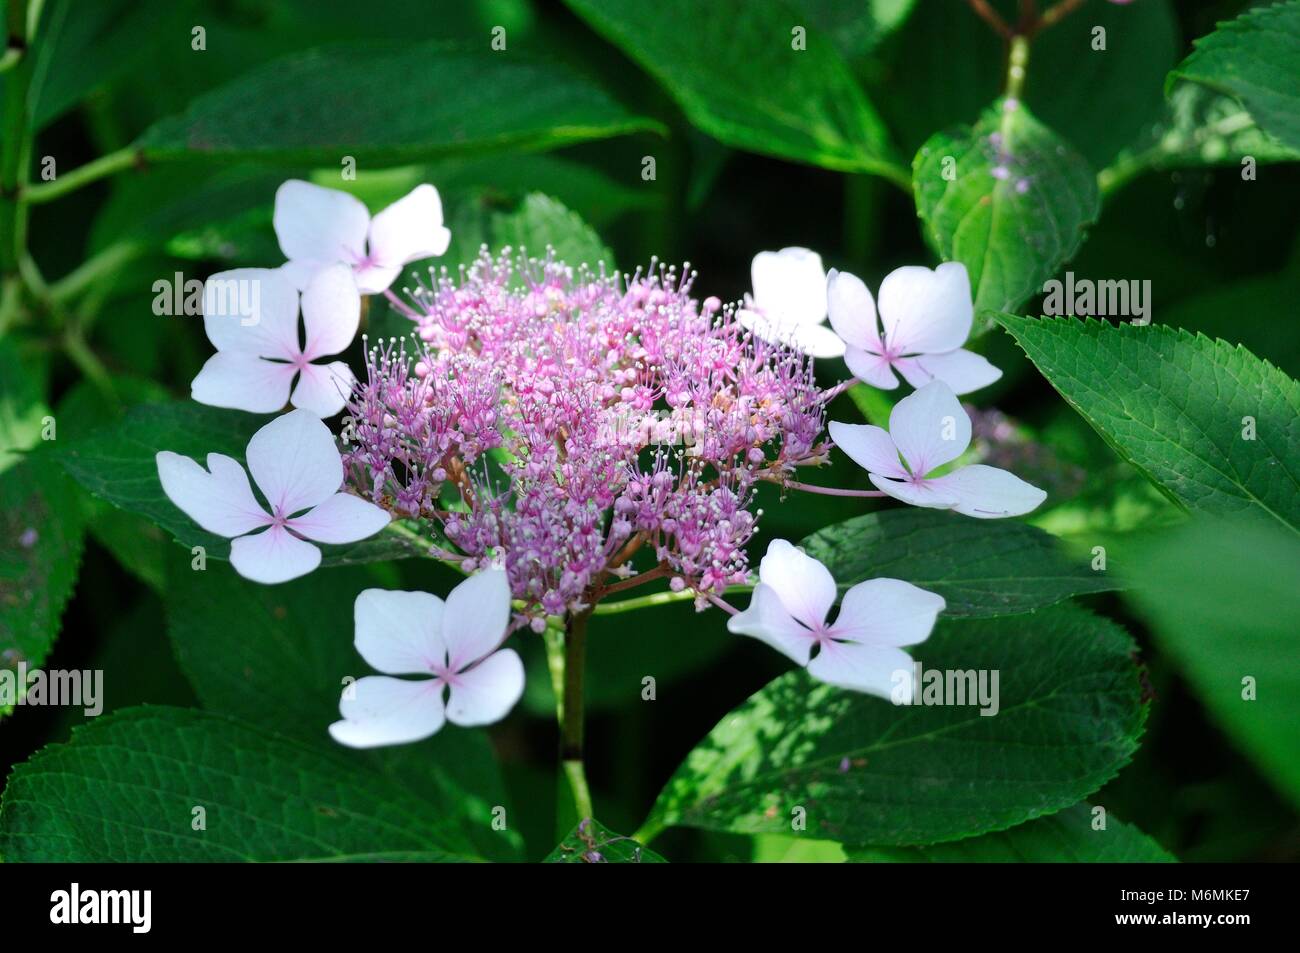 Hortensia flower close up Stock Photo